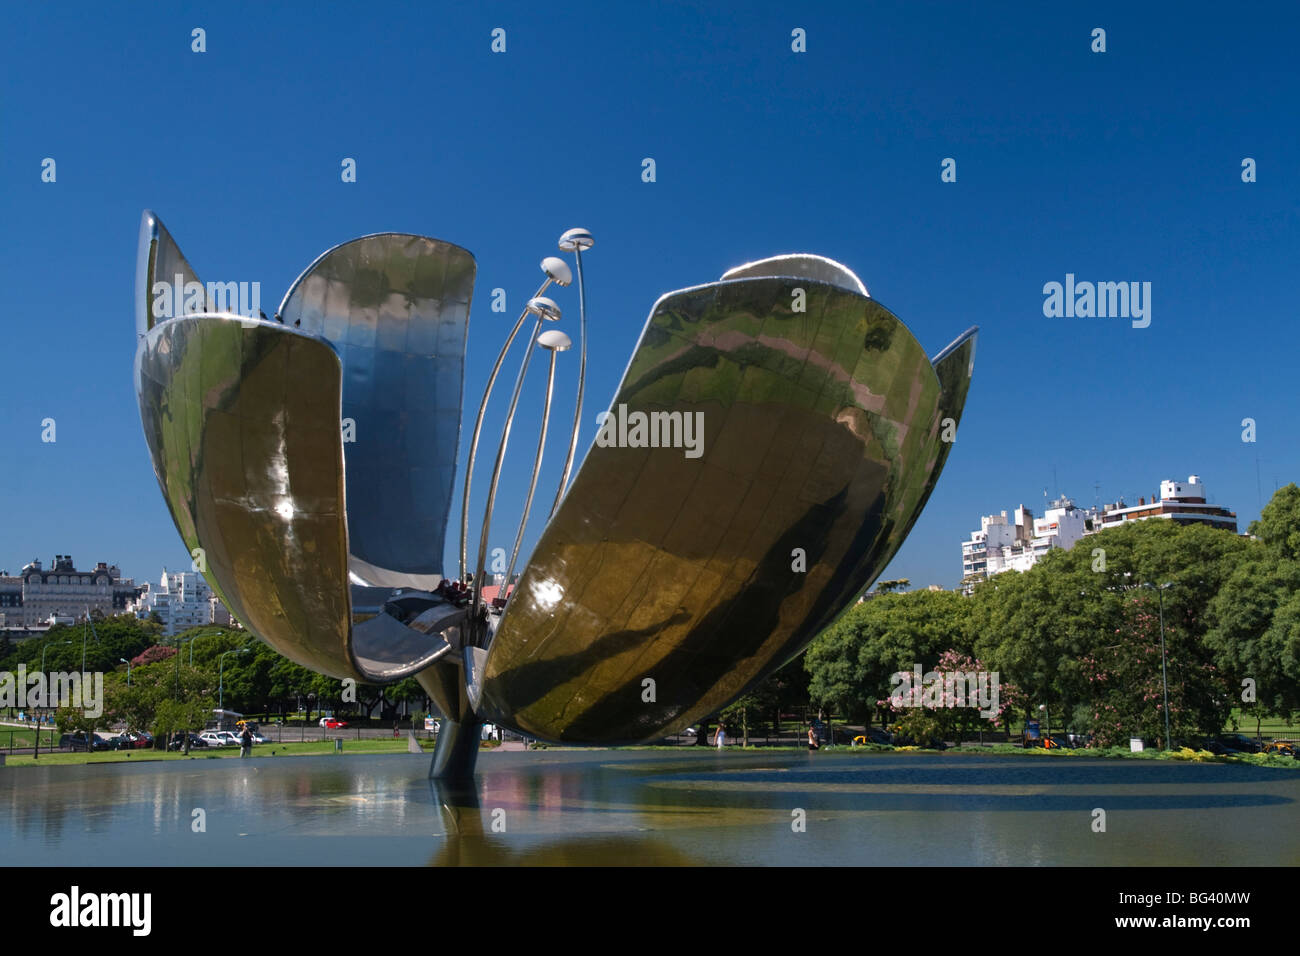 Argentina, Buenos Aires, Recoleta, Floralis Generica by Edouardo Catalano, giant flower sculpture, Plaza Naciones Unidas Stock Photo